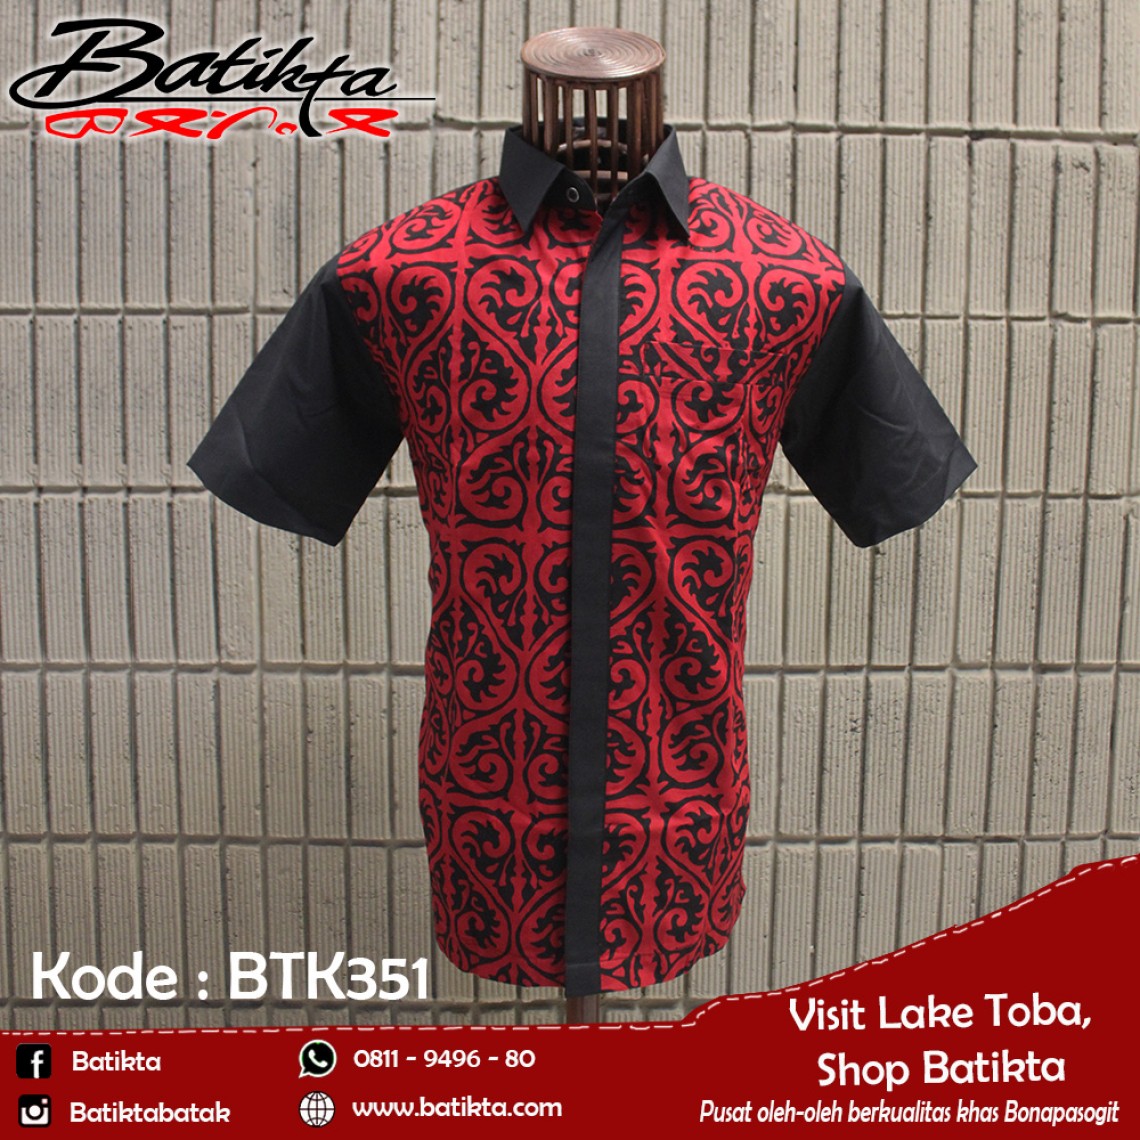 BTK351 HEM Batik Motif Gorga Warna Merah Hitam profile picture